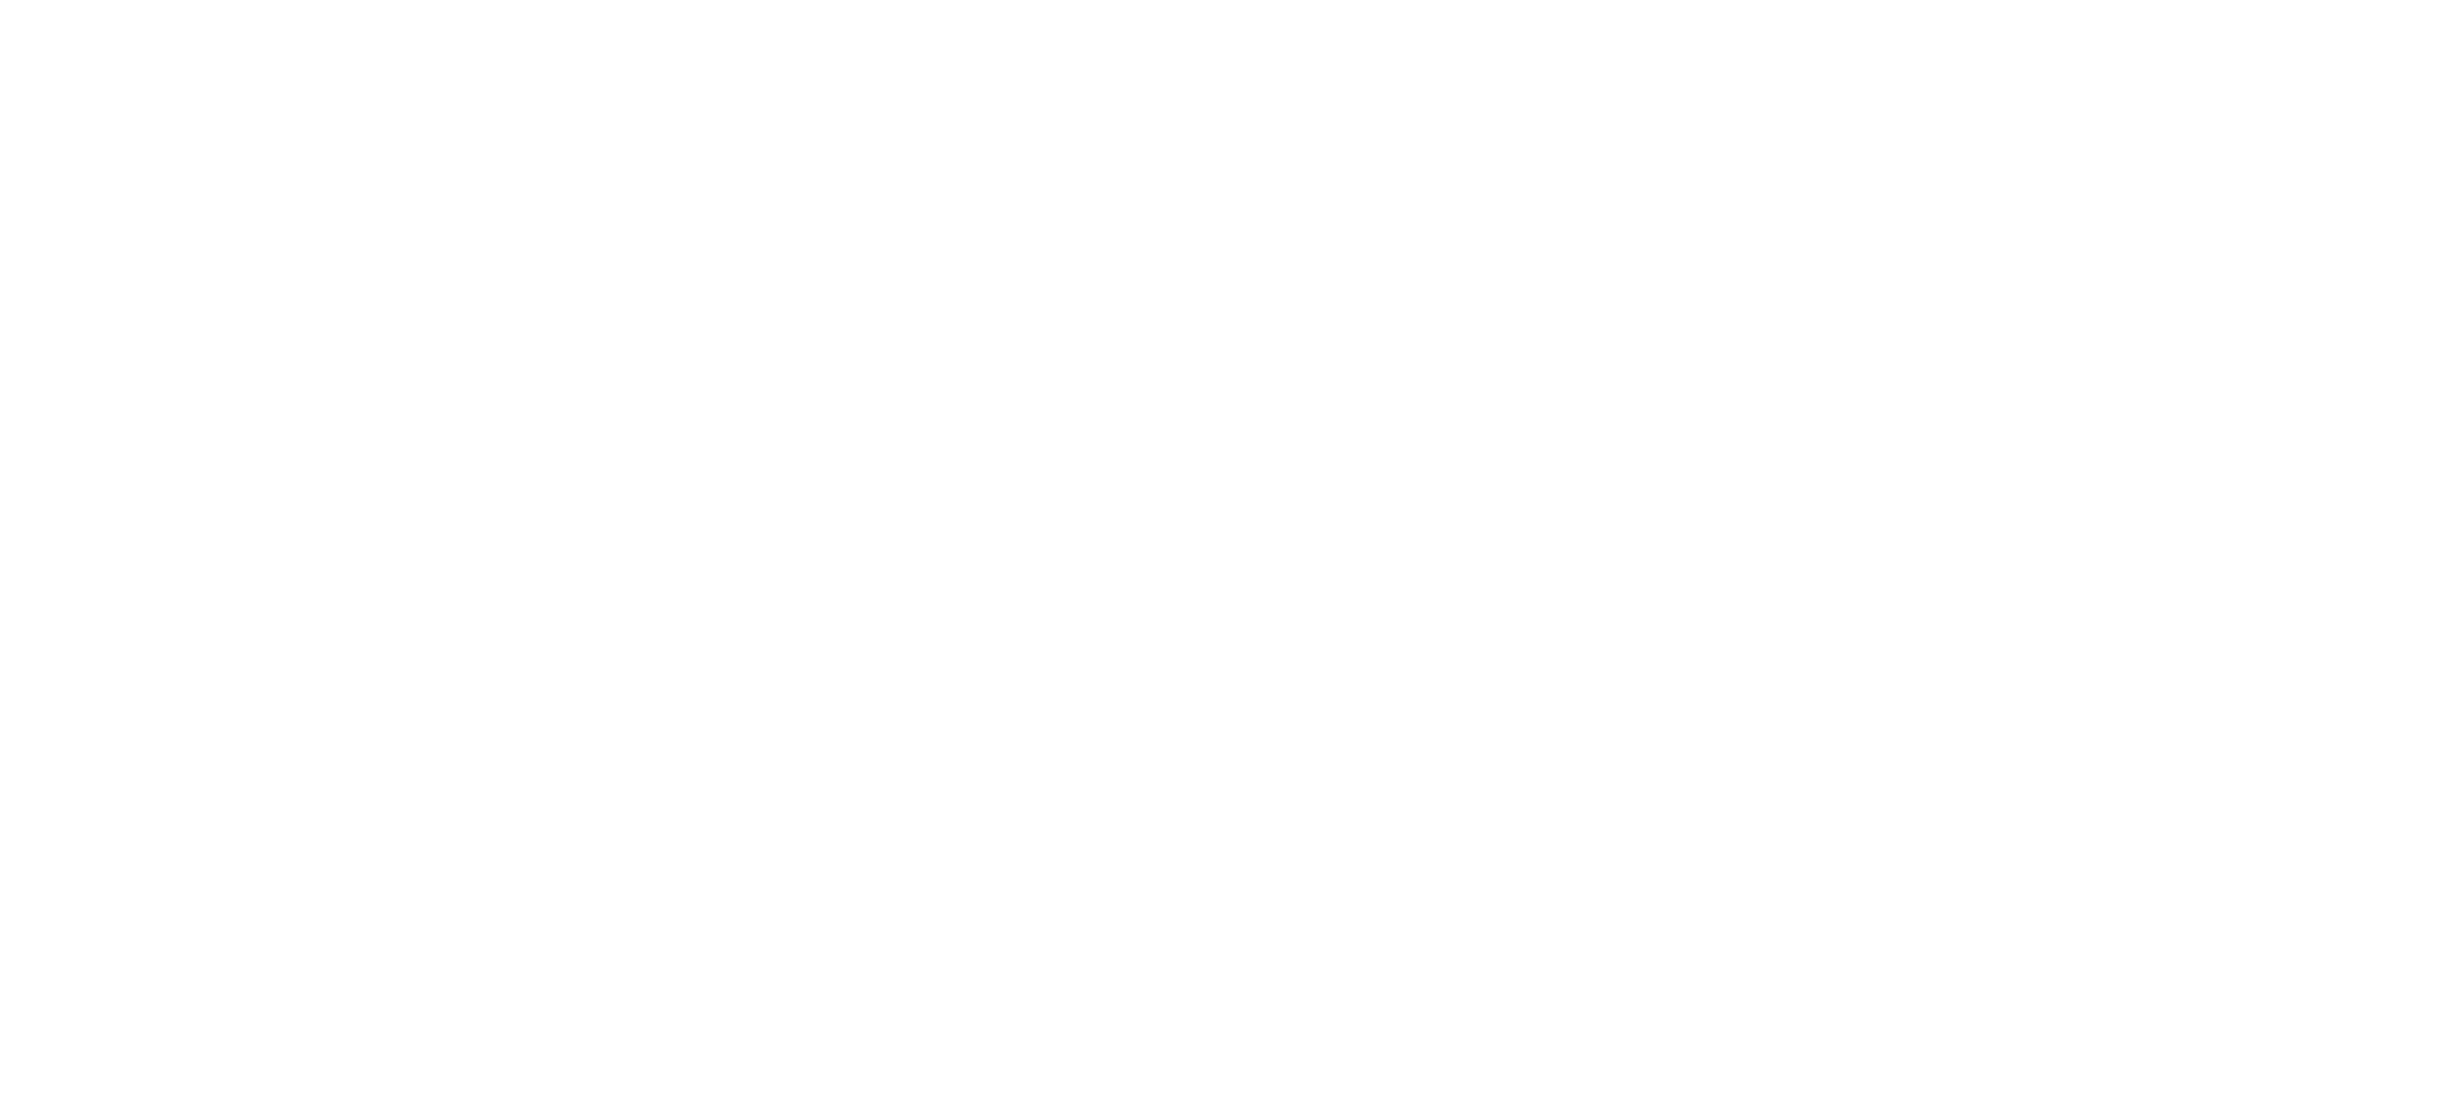 WorkTool Logo